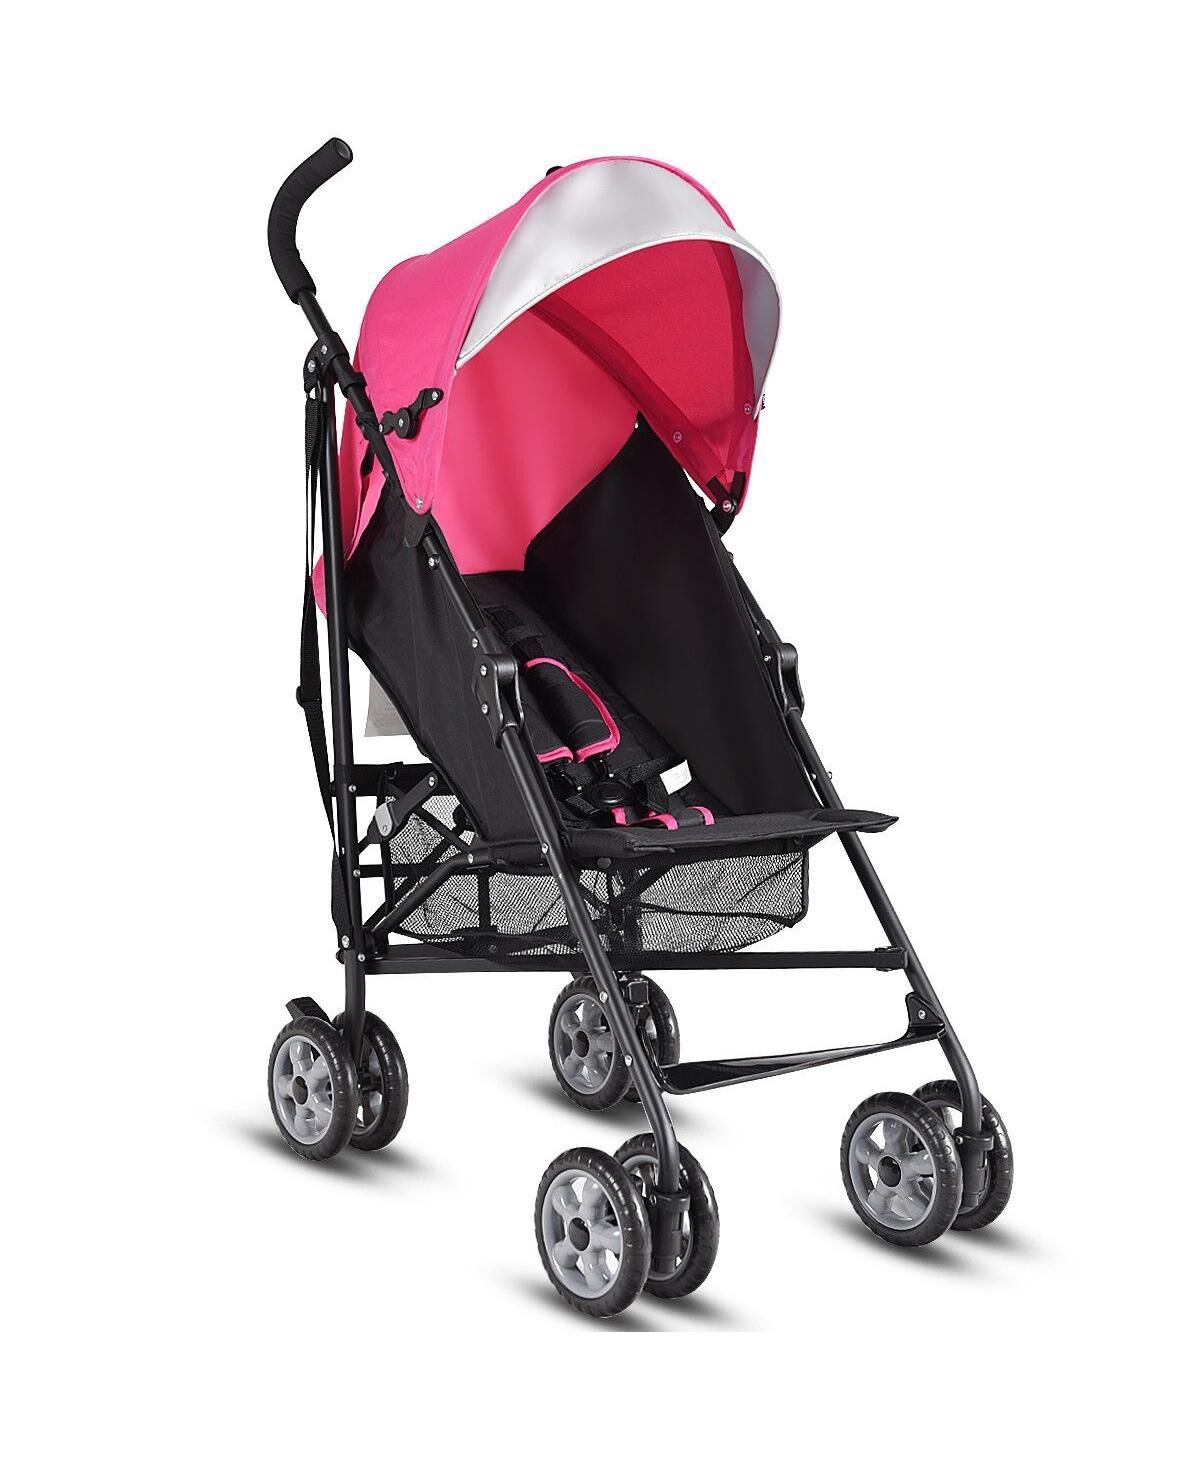 Slickblue Folding Lightweight Baby Toddler Umbrella Travel Stroller - Pink